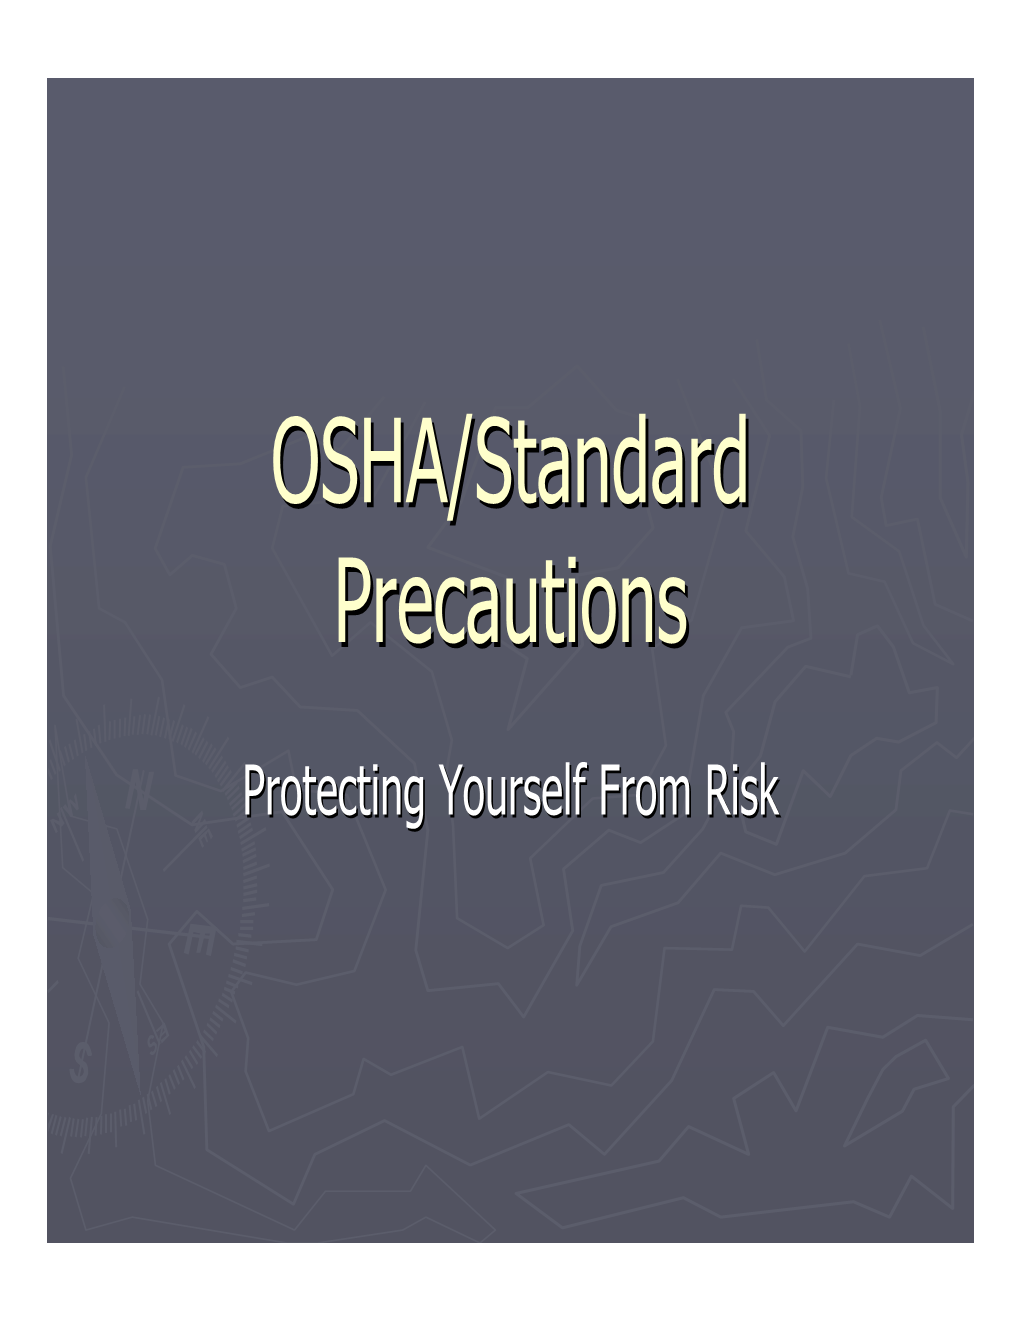 OSHA/Standard Precautionsprecautions